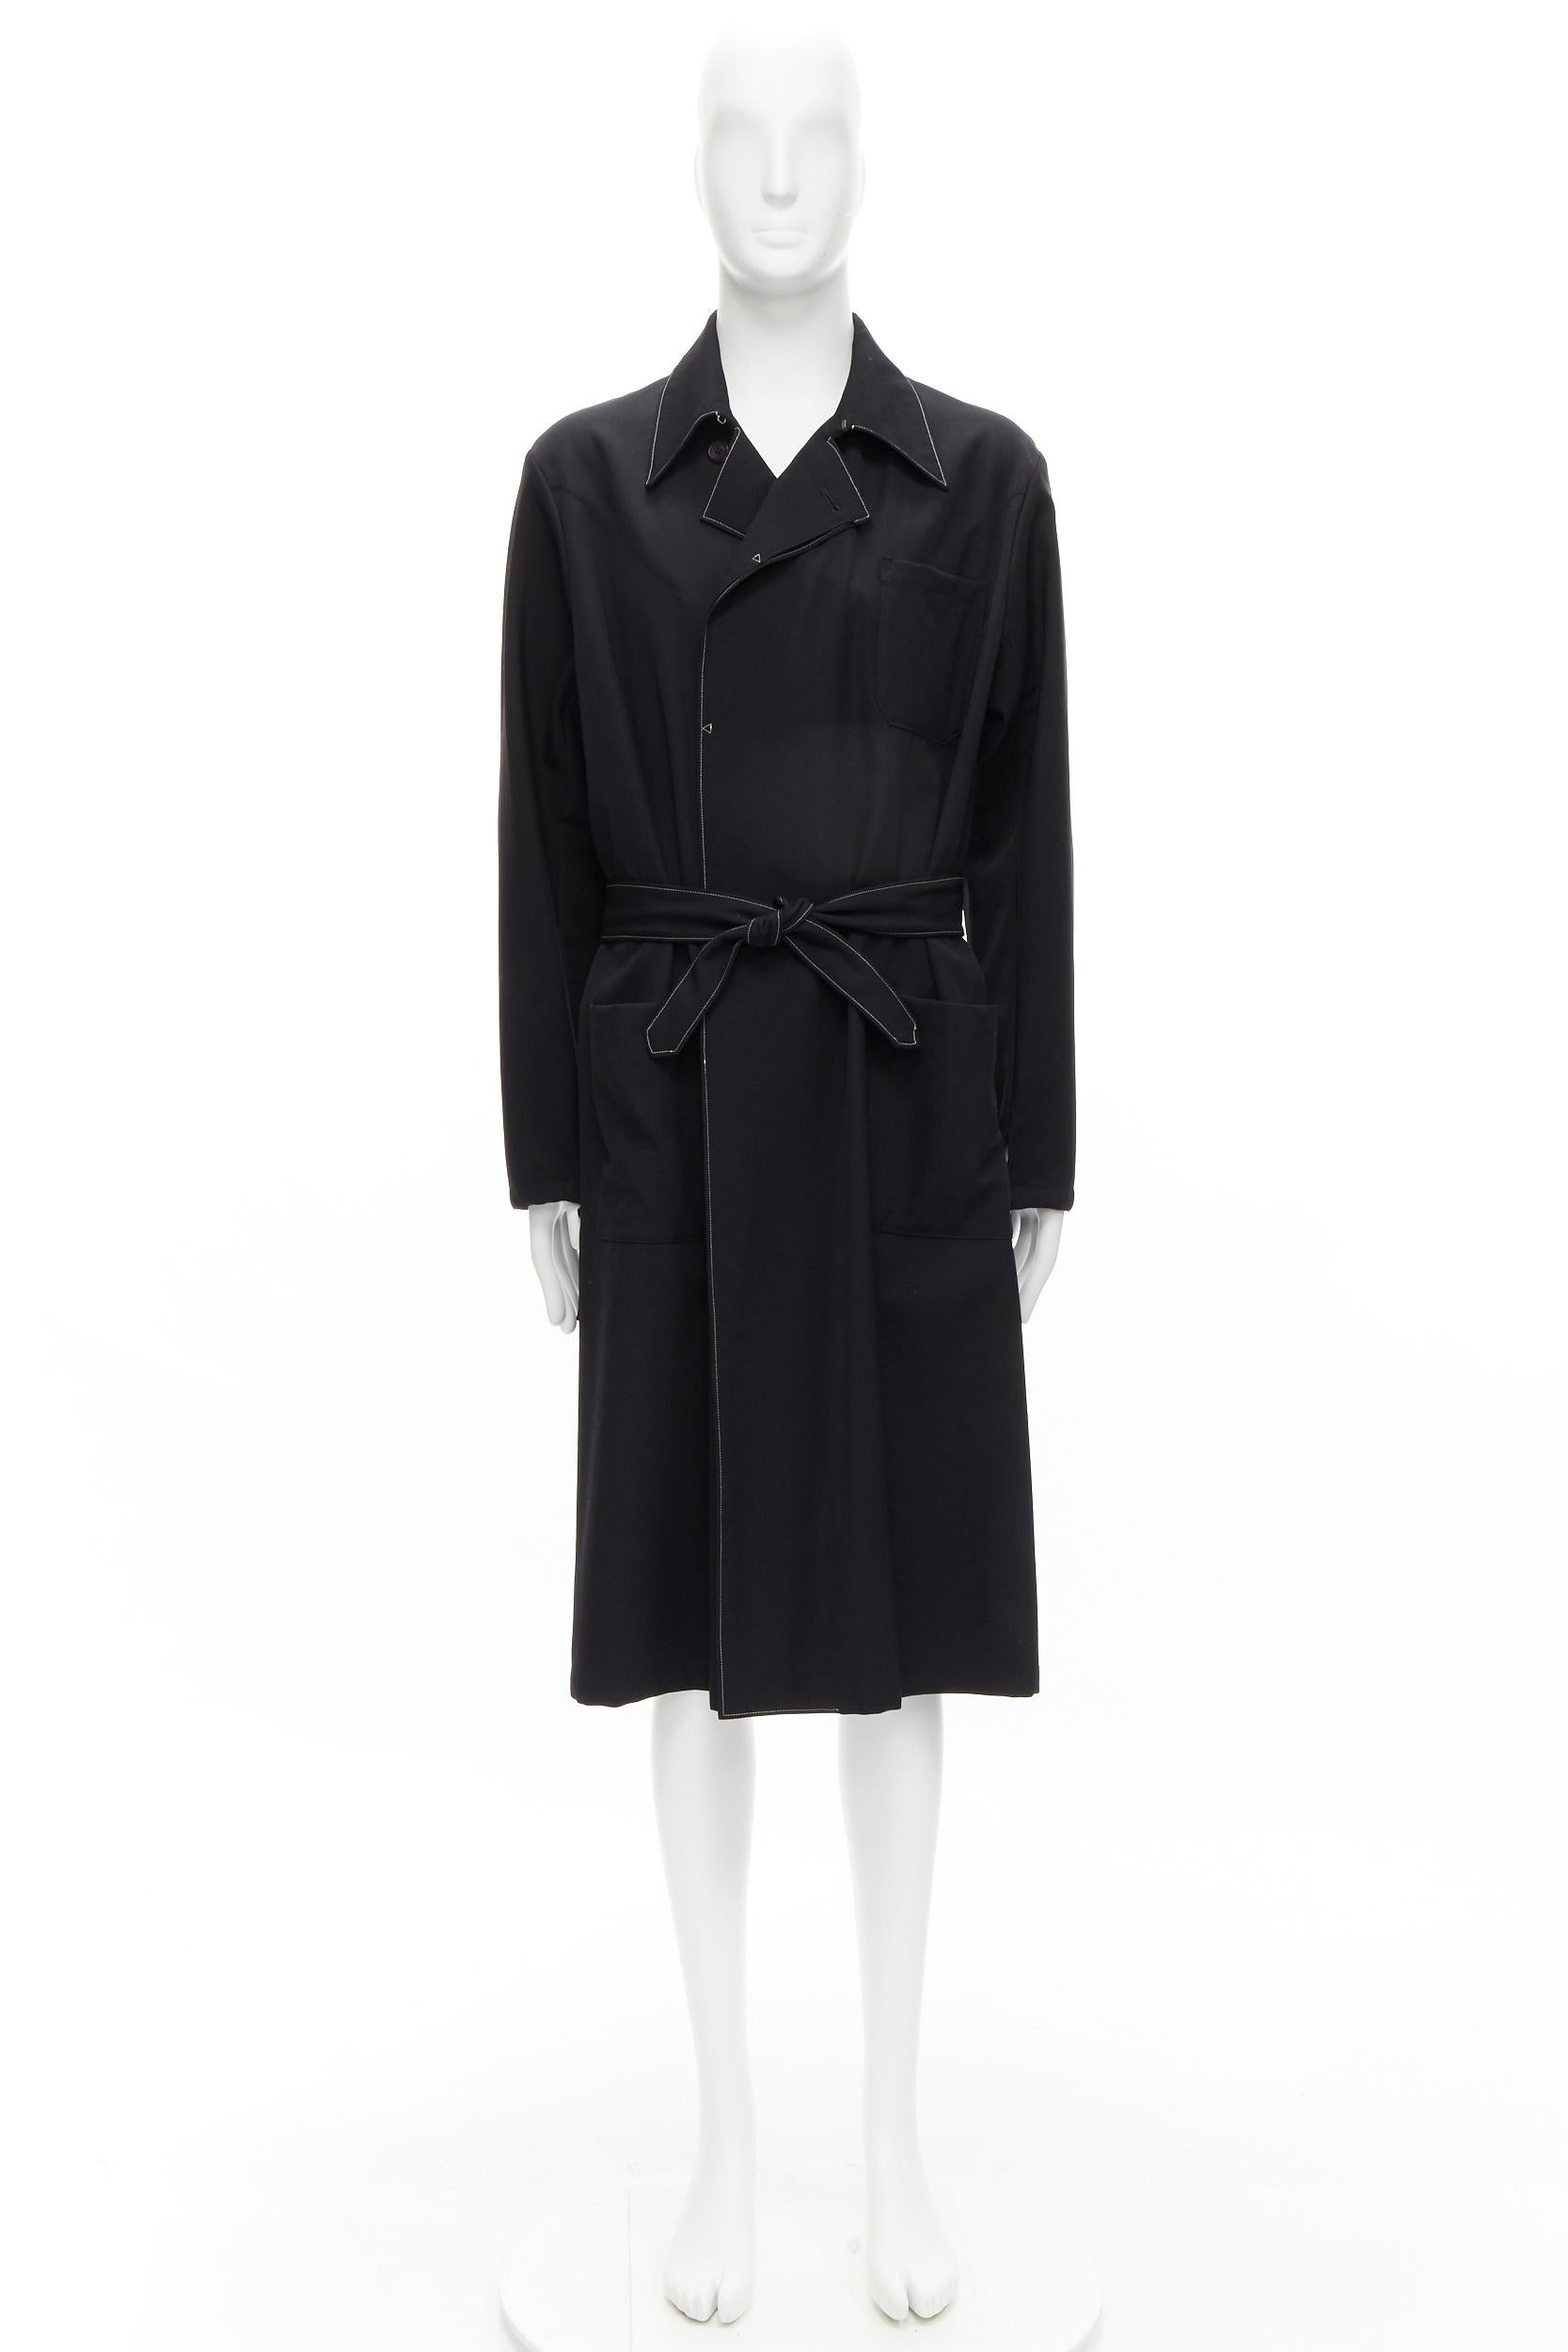 YOHJI YAMAMOTO HOMME Vintage black white topstitched draped belted coat M For Sale 10